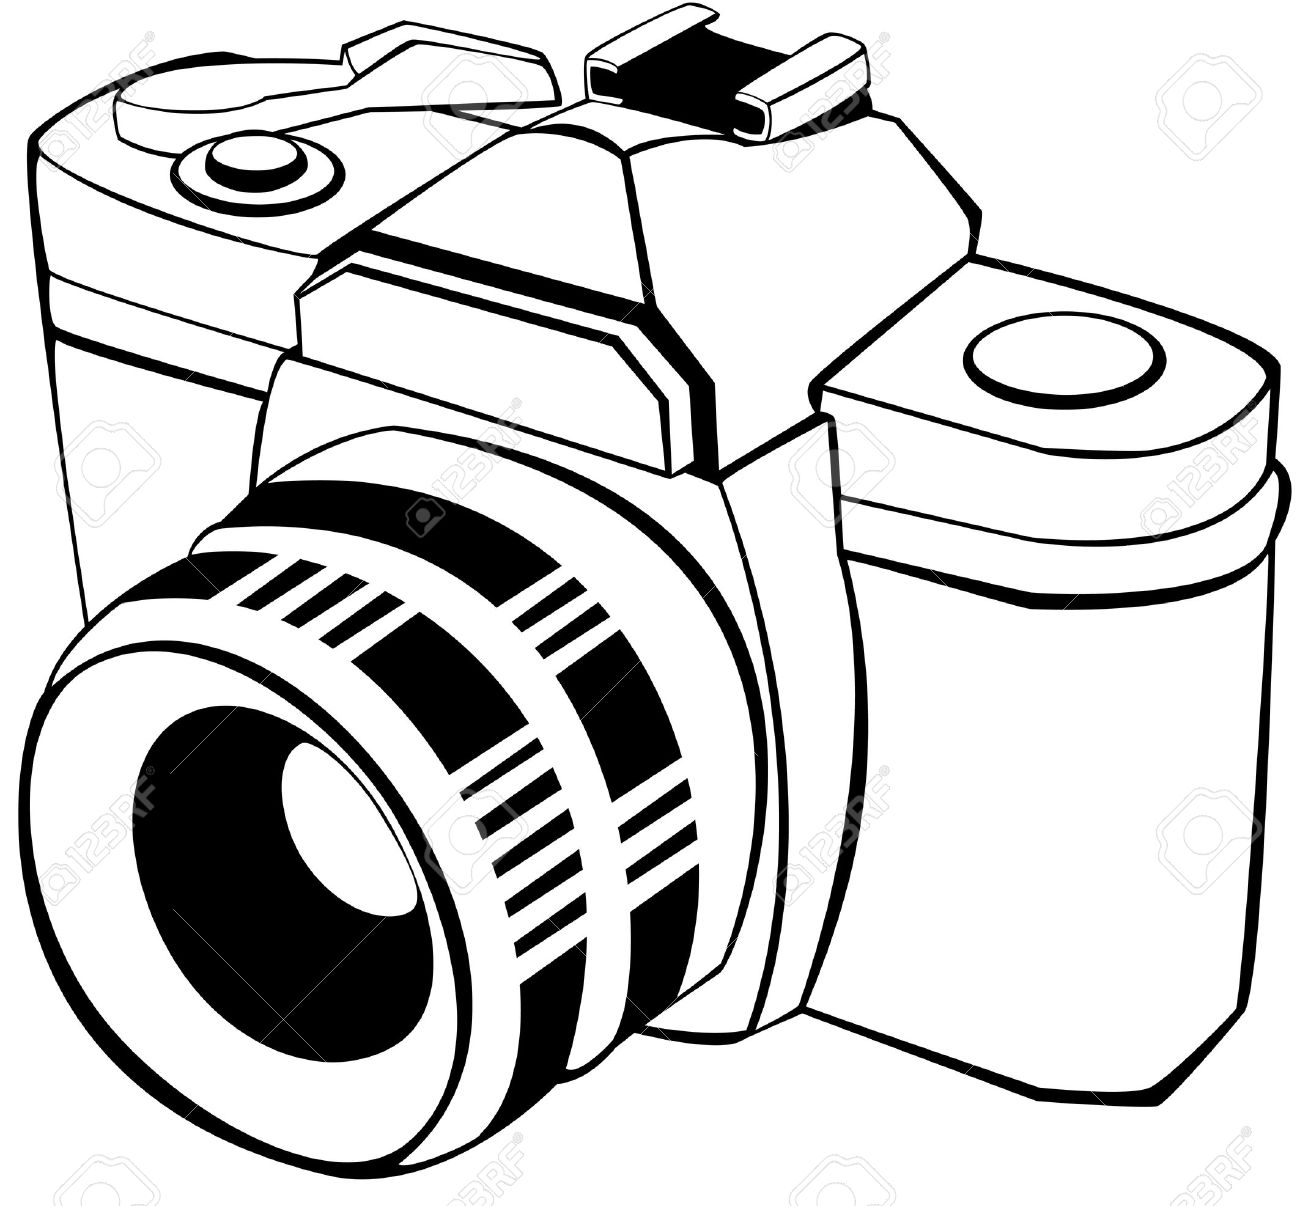 Simple Video Camera Drawing at GetDrawings | Free download